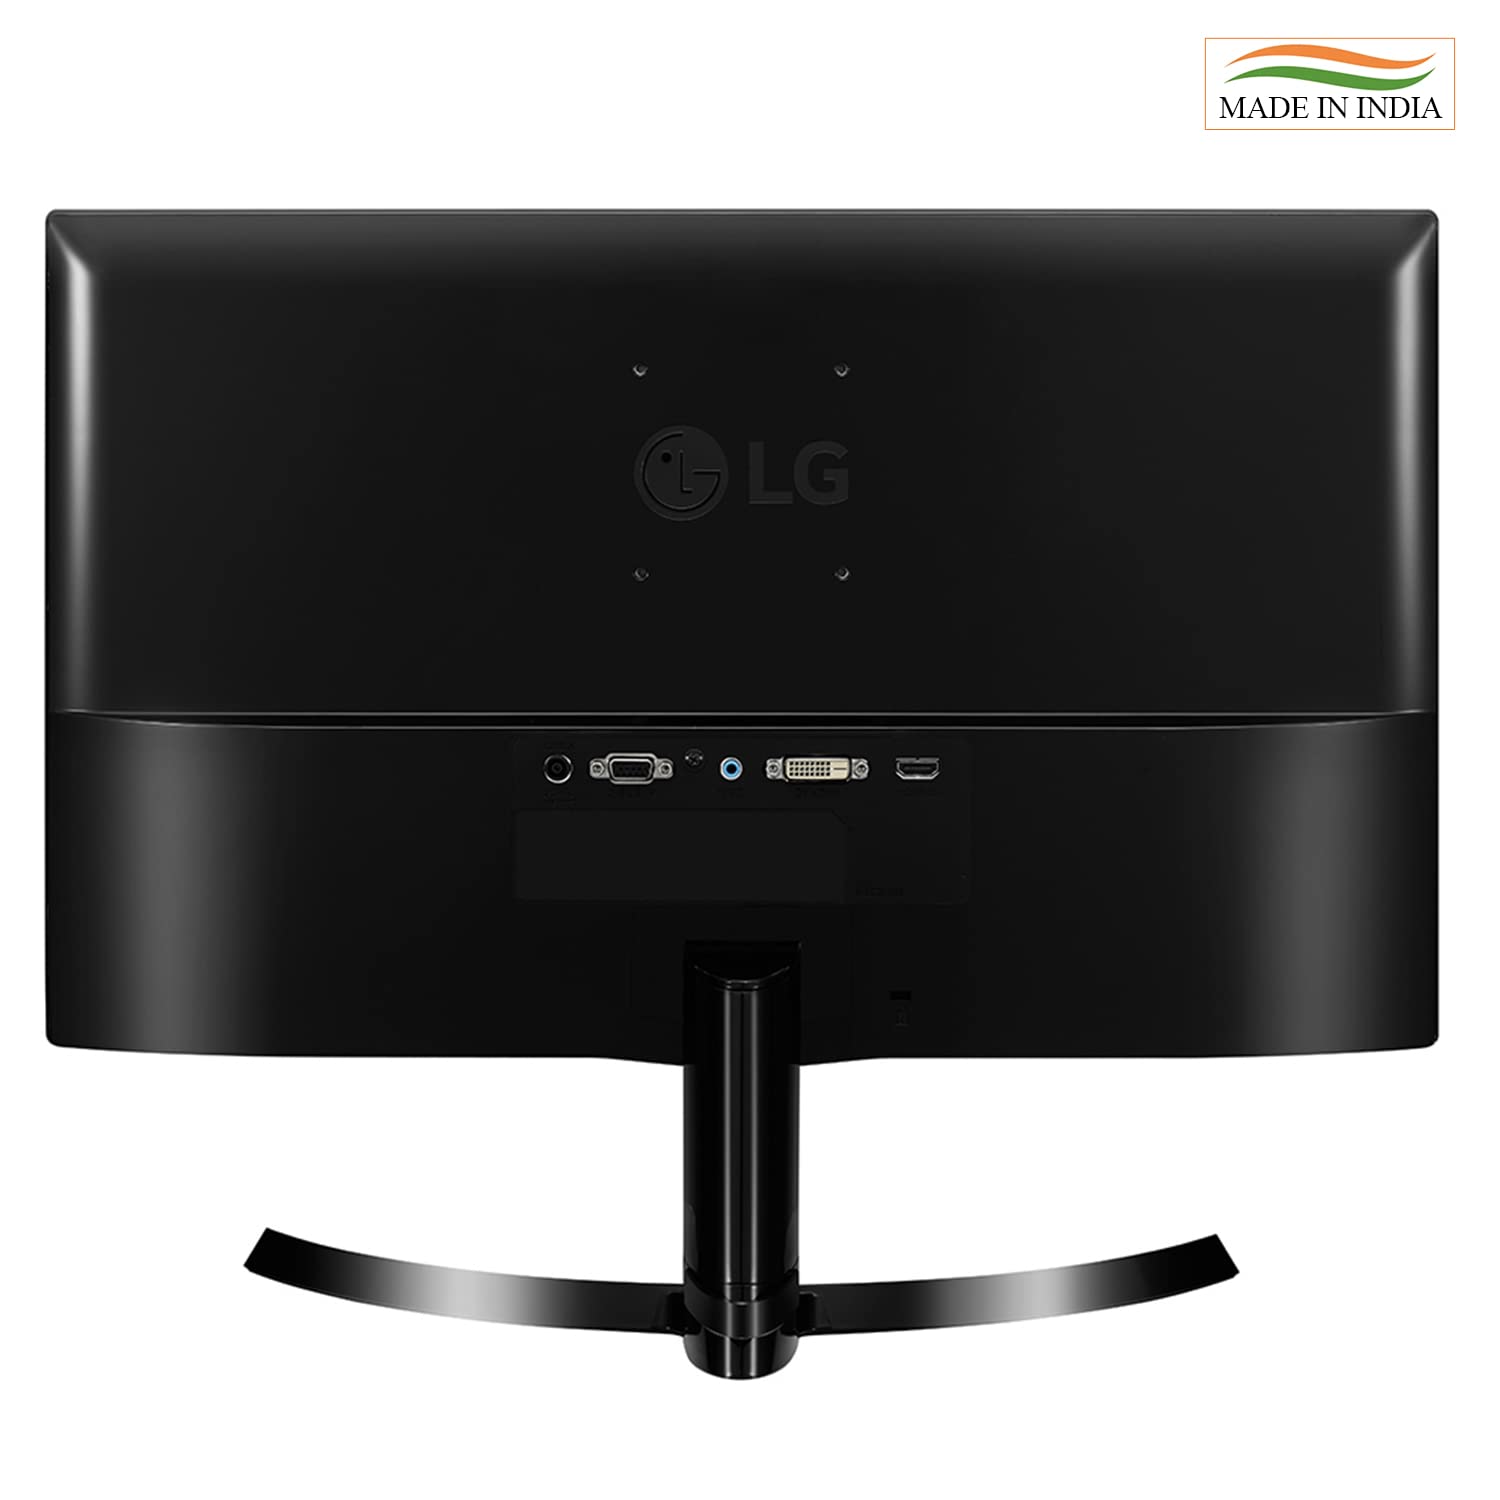 LG 22MP68VQ Full HD IPS Panel VGA,HDMI,DVI 22